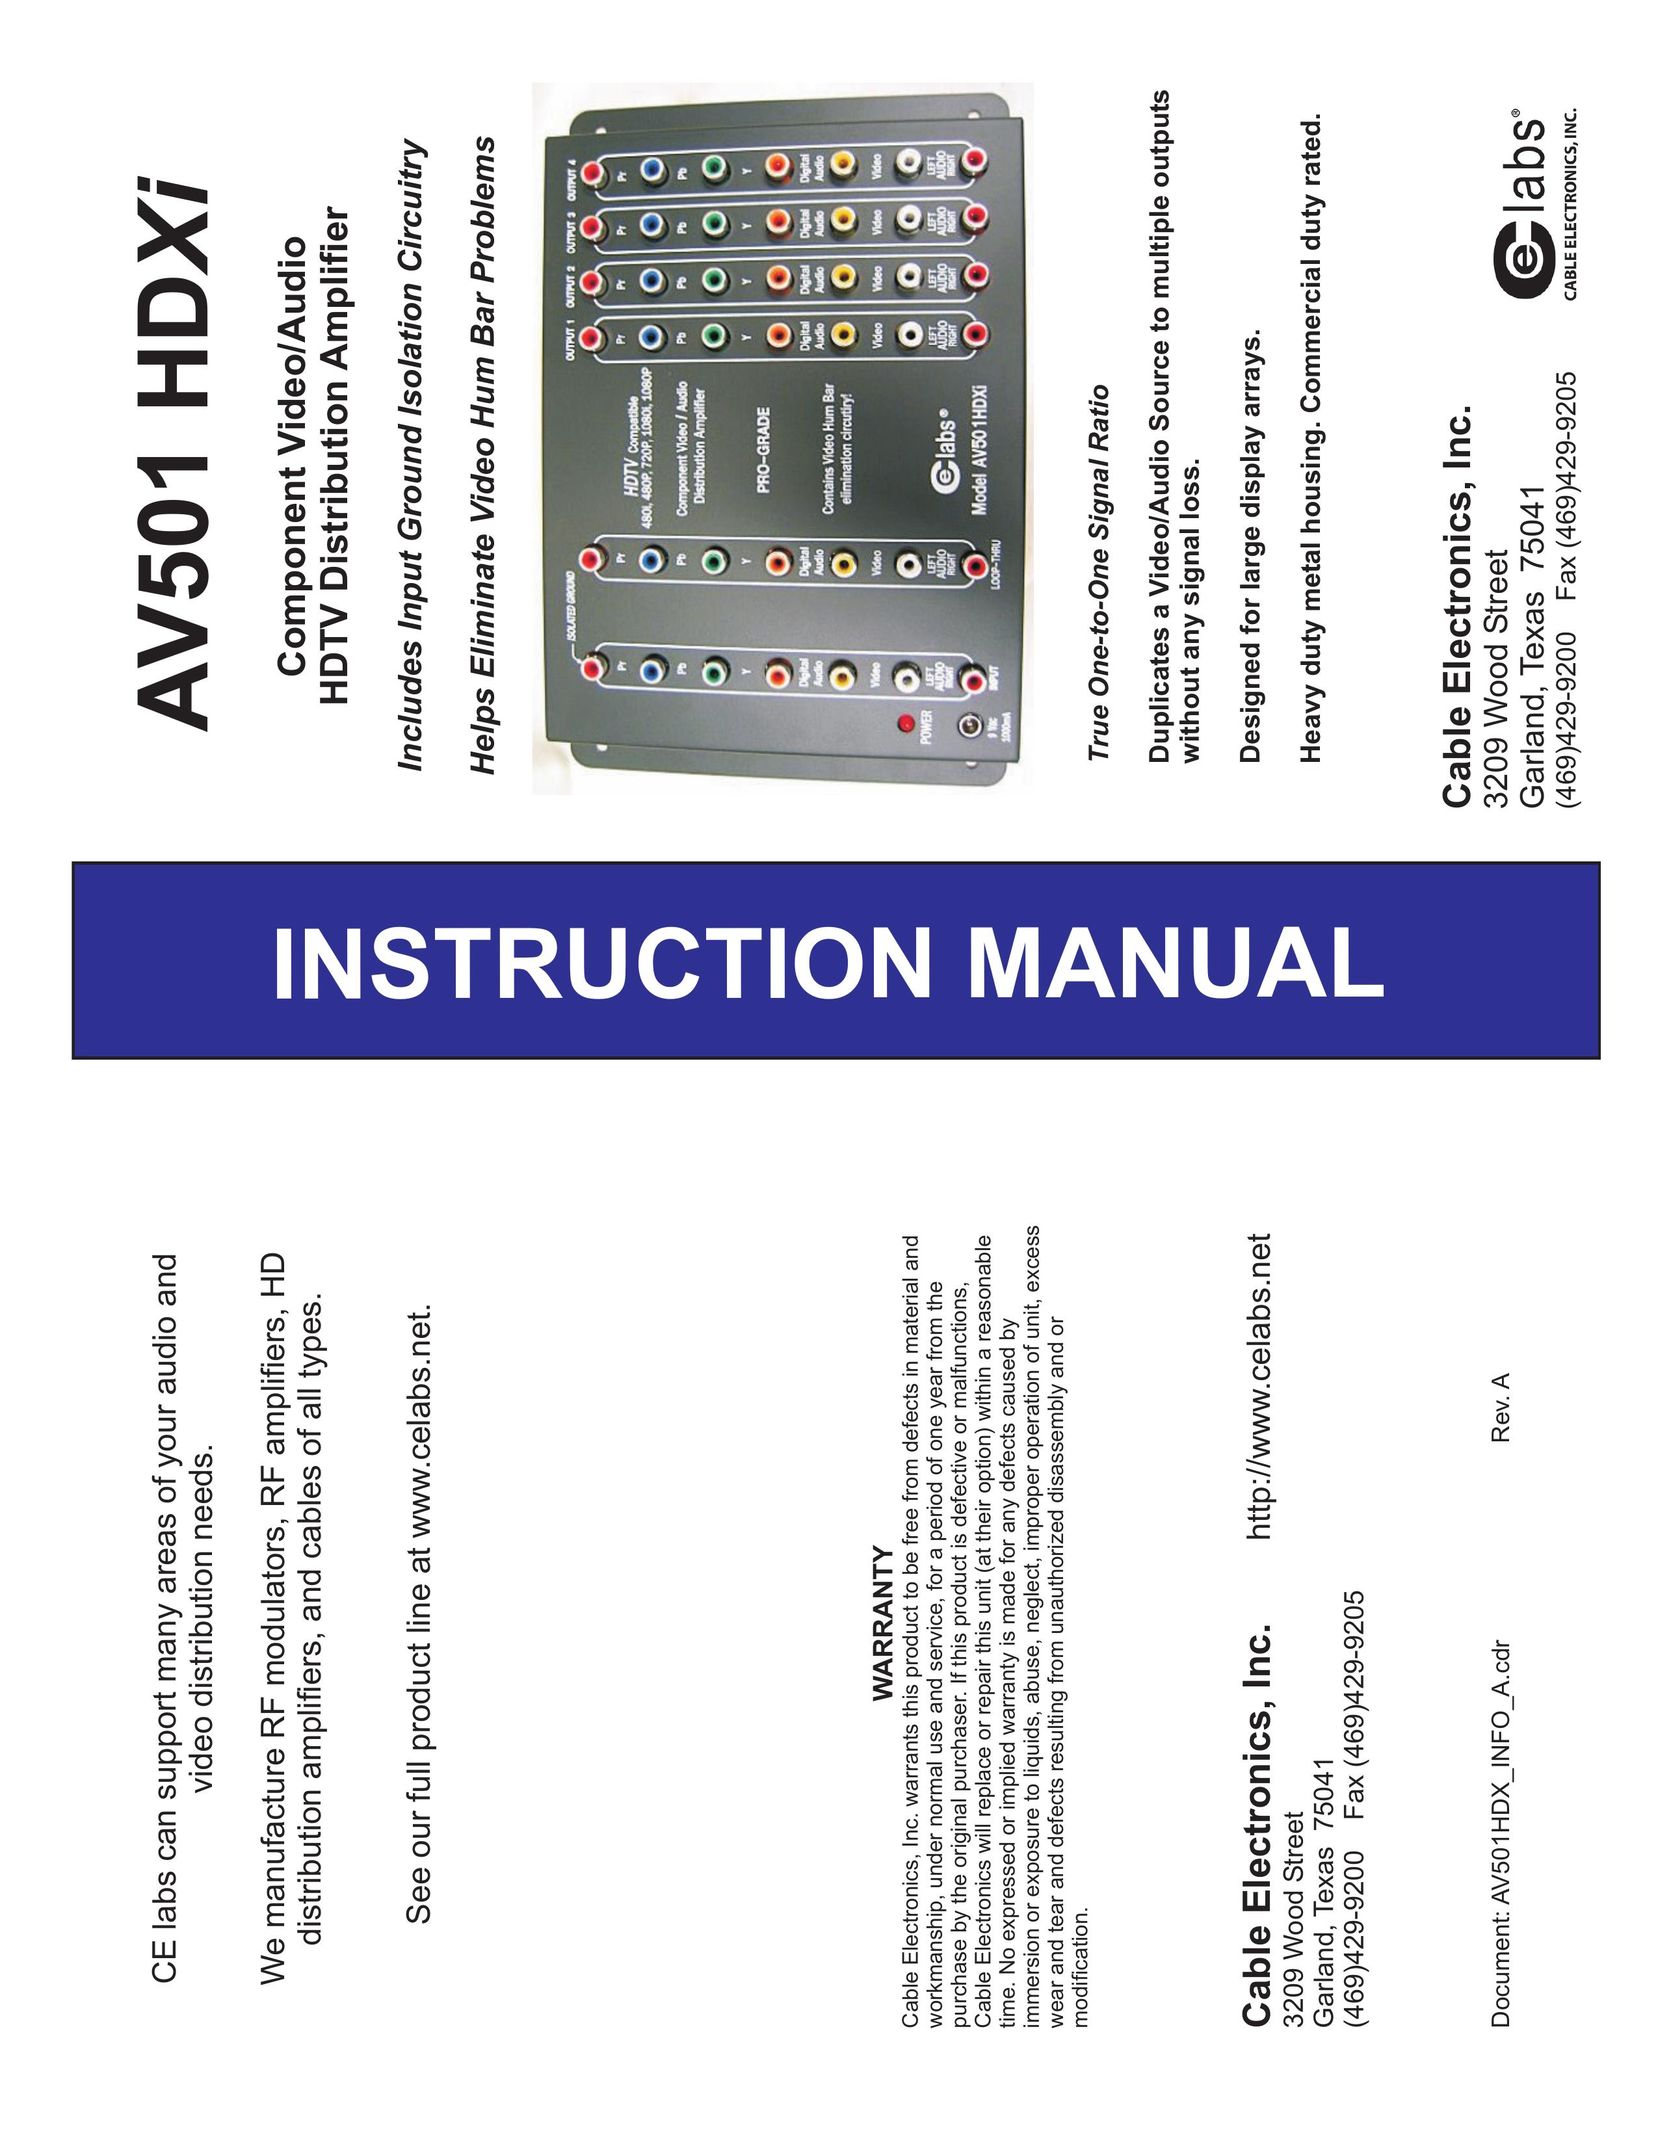 Cable Electronics AV501HDXi Stereo Amplifier User Manual